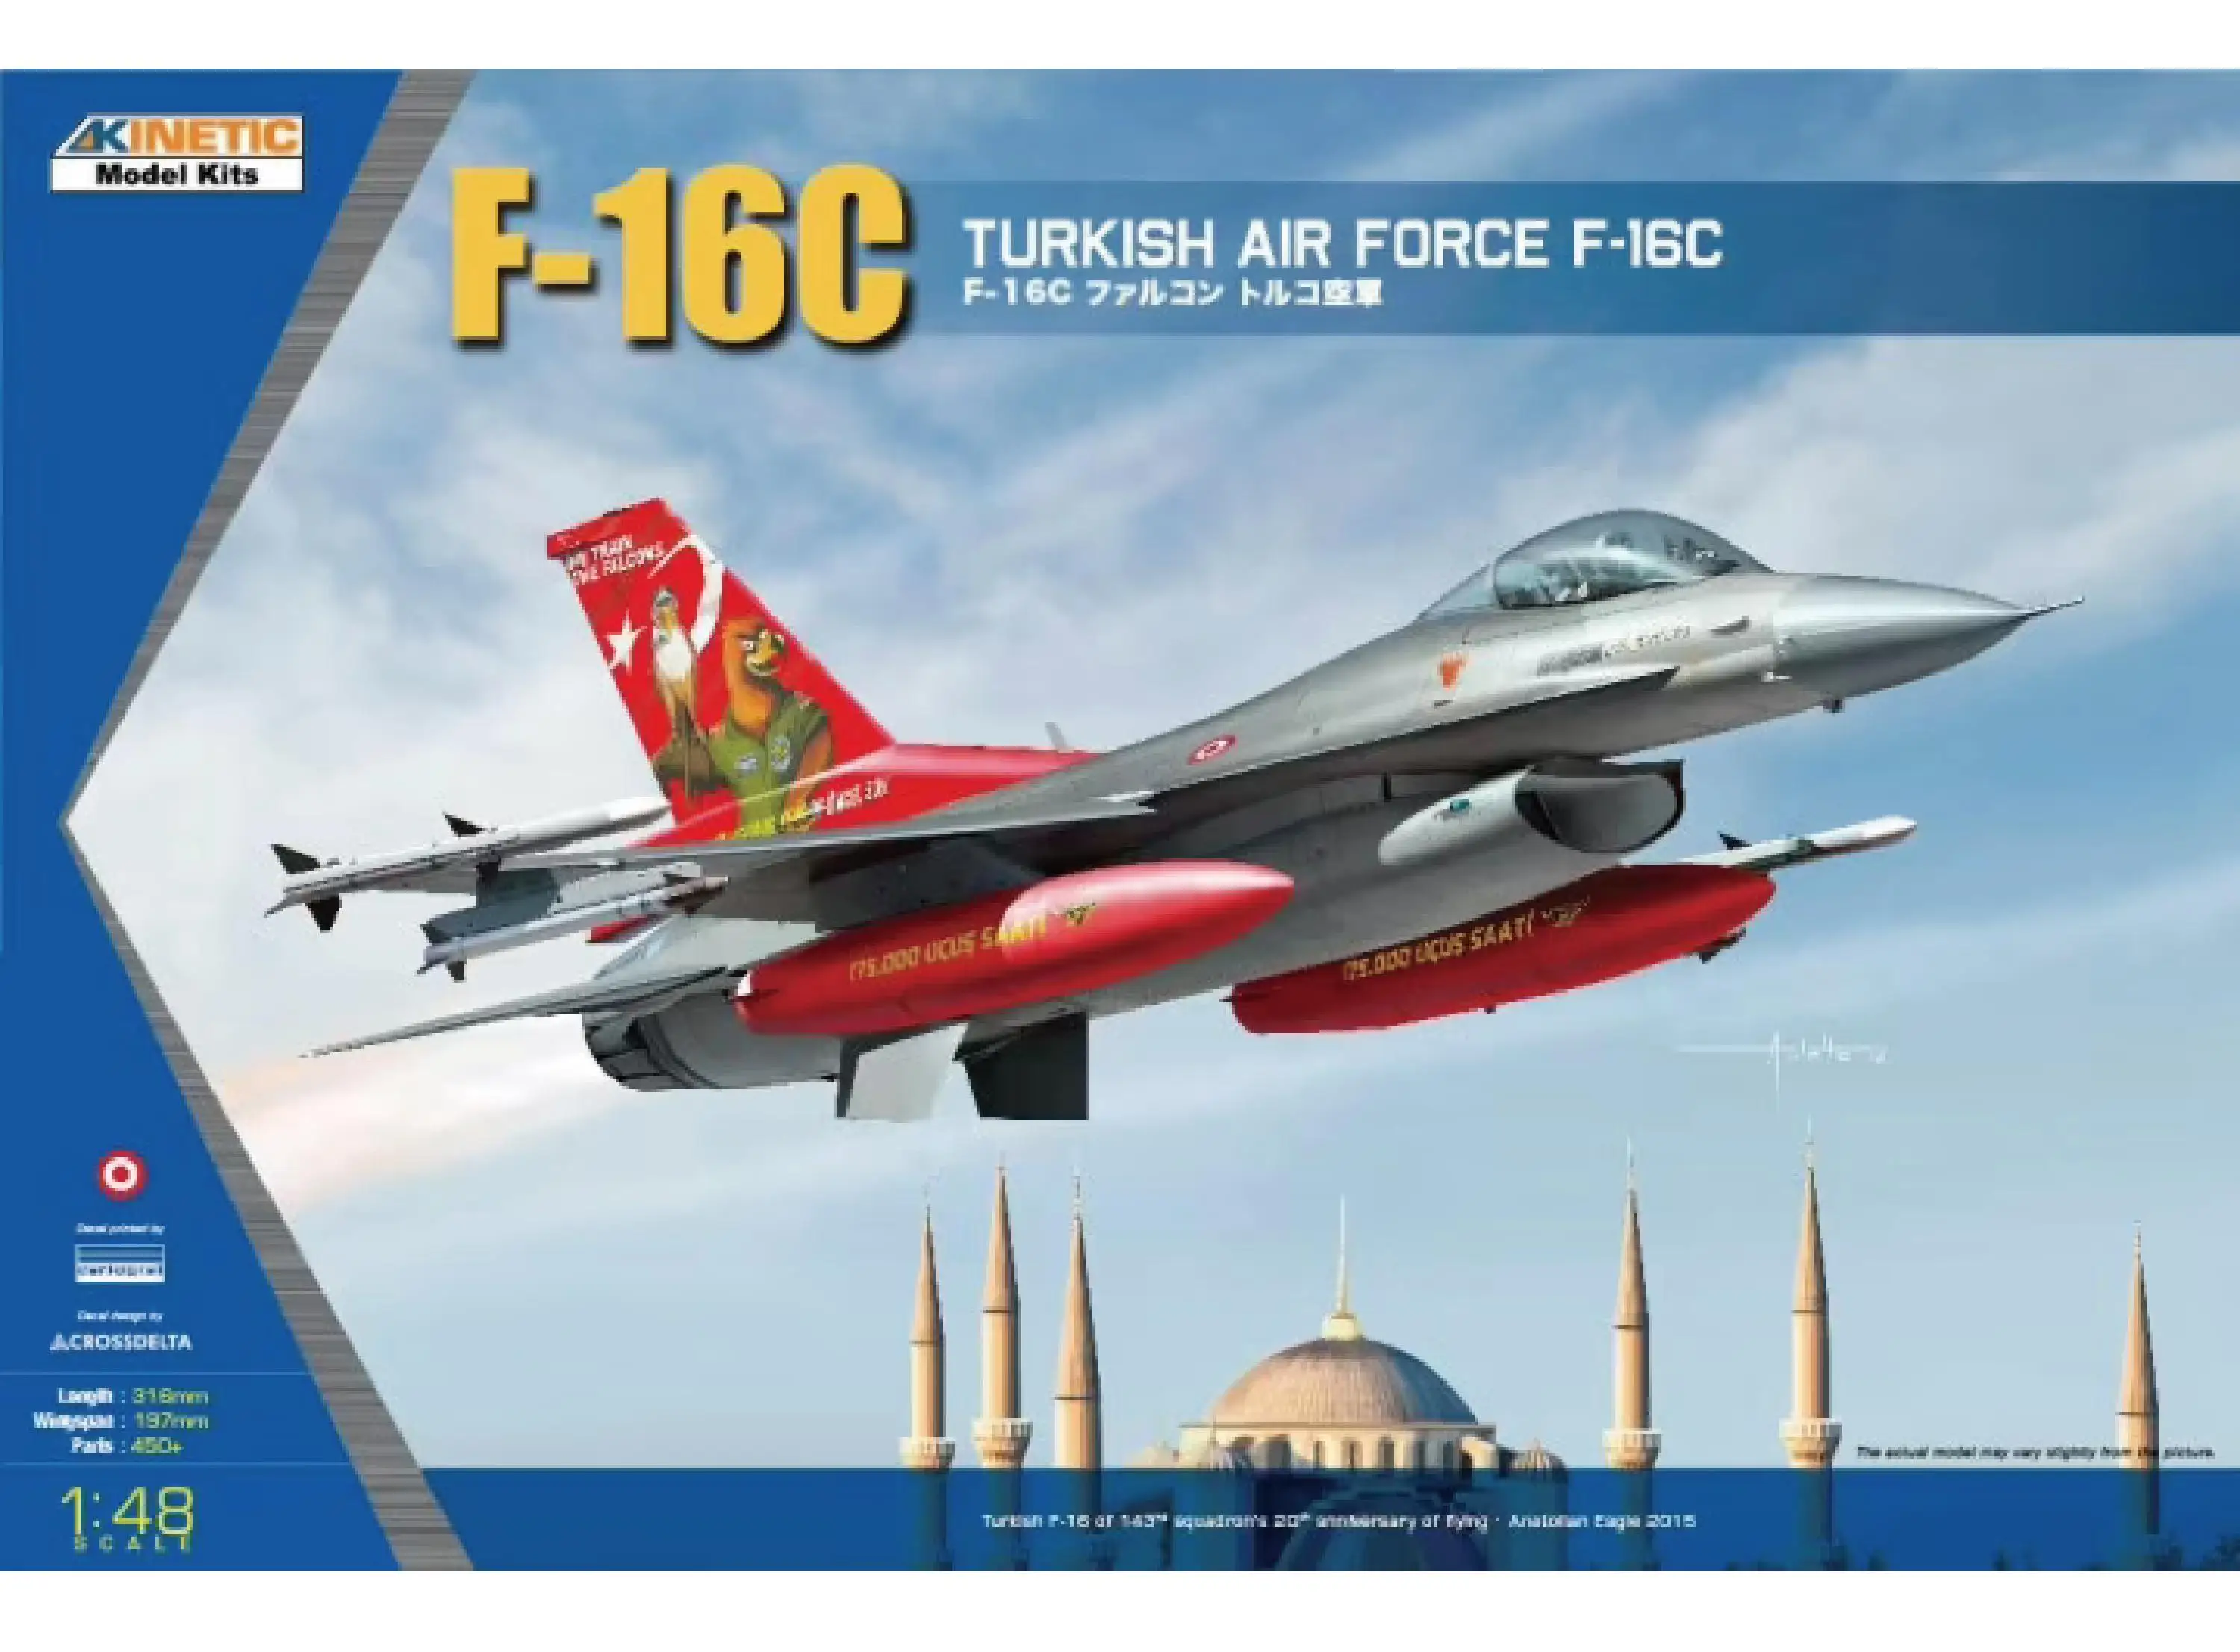 

KINETIC K48069 1/48 Scale Turkish Air Force F-16C Model Kit